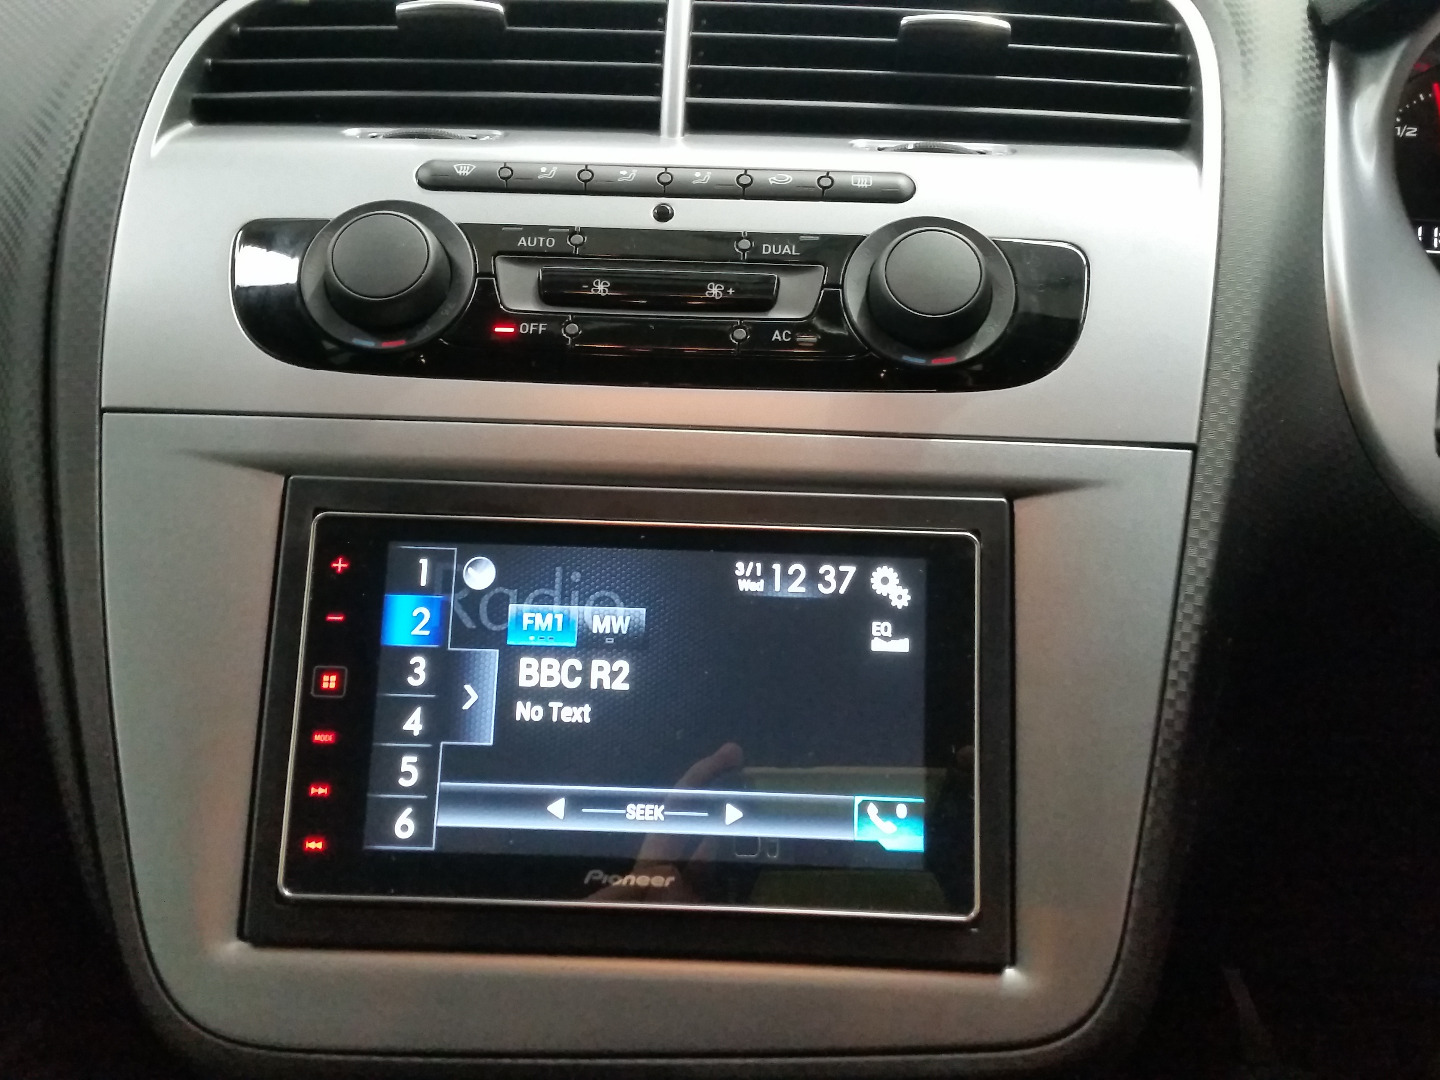 Seat Altea radio